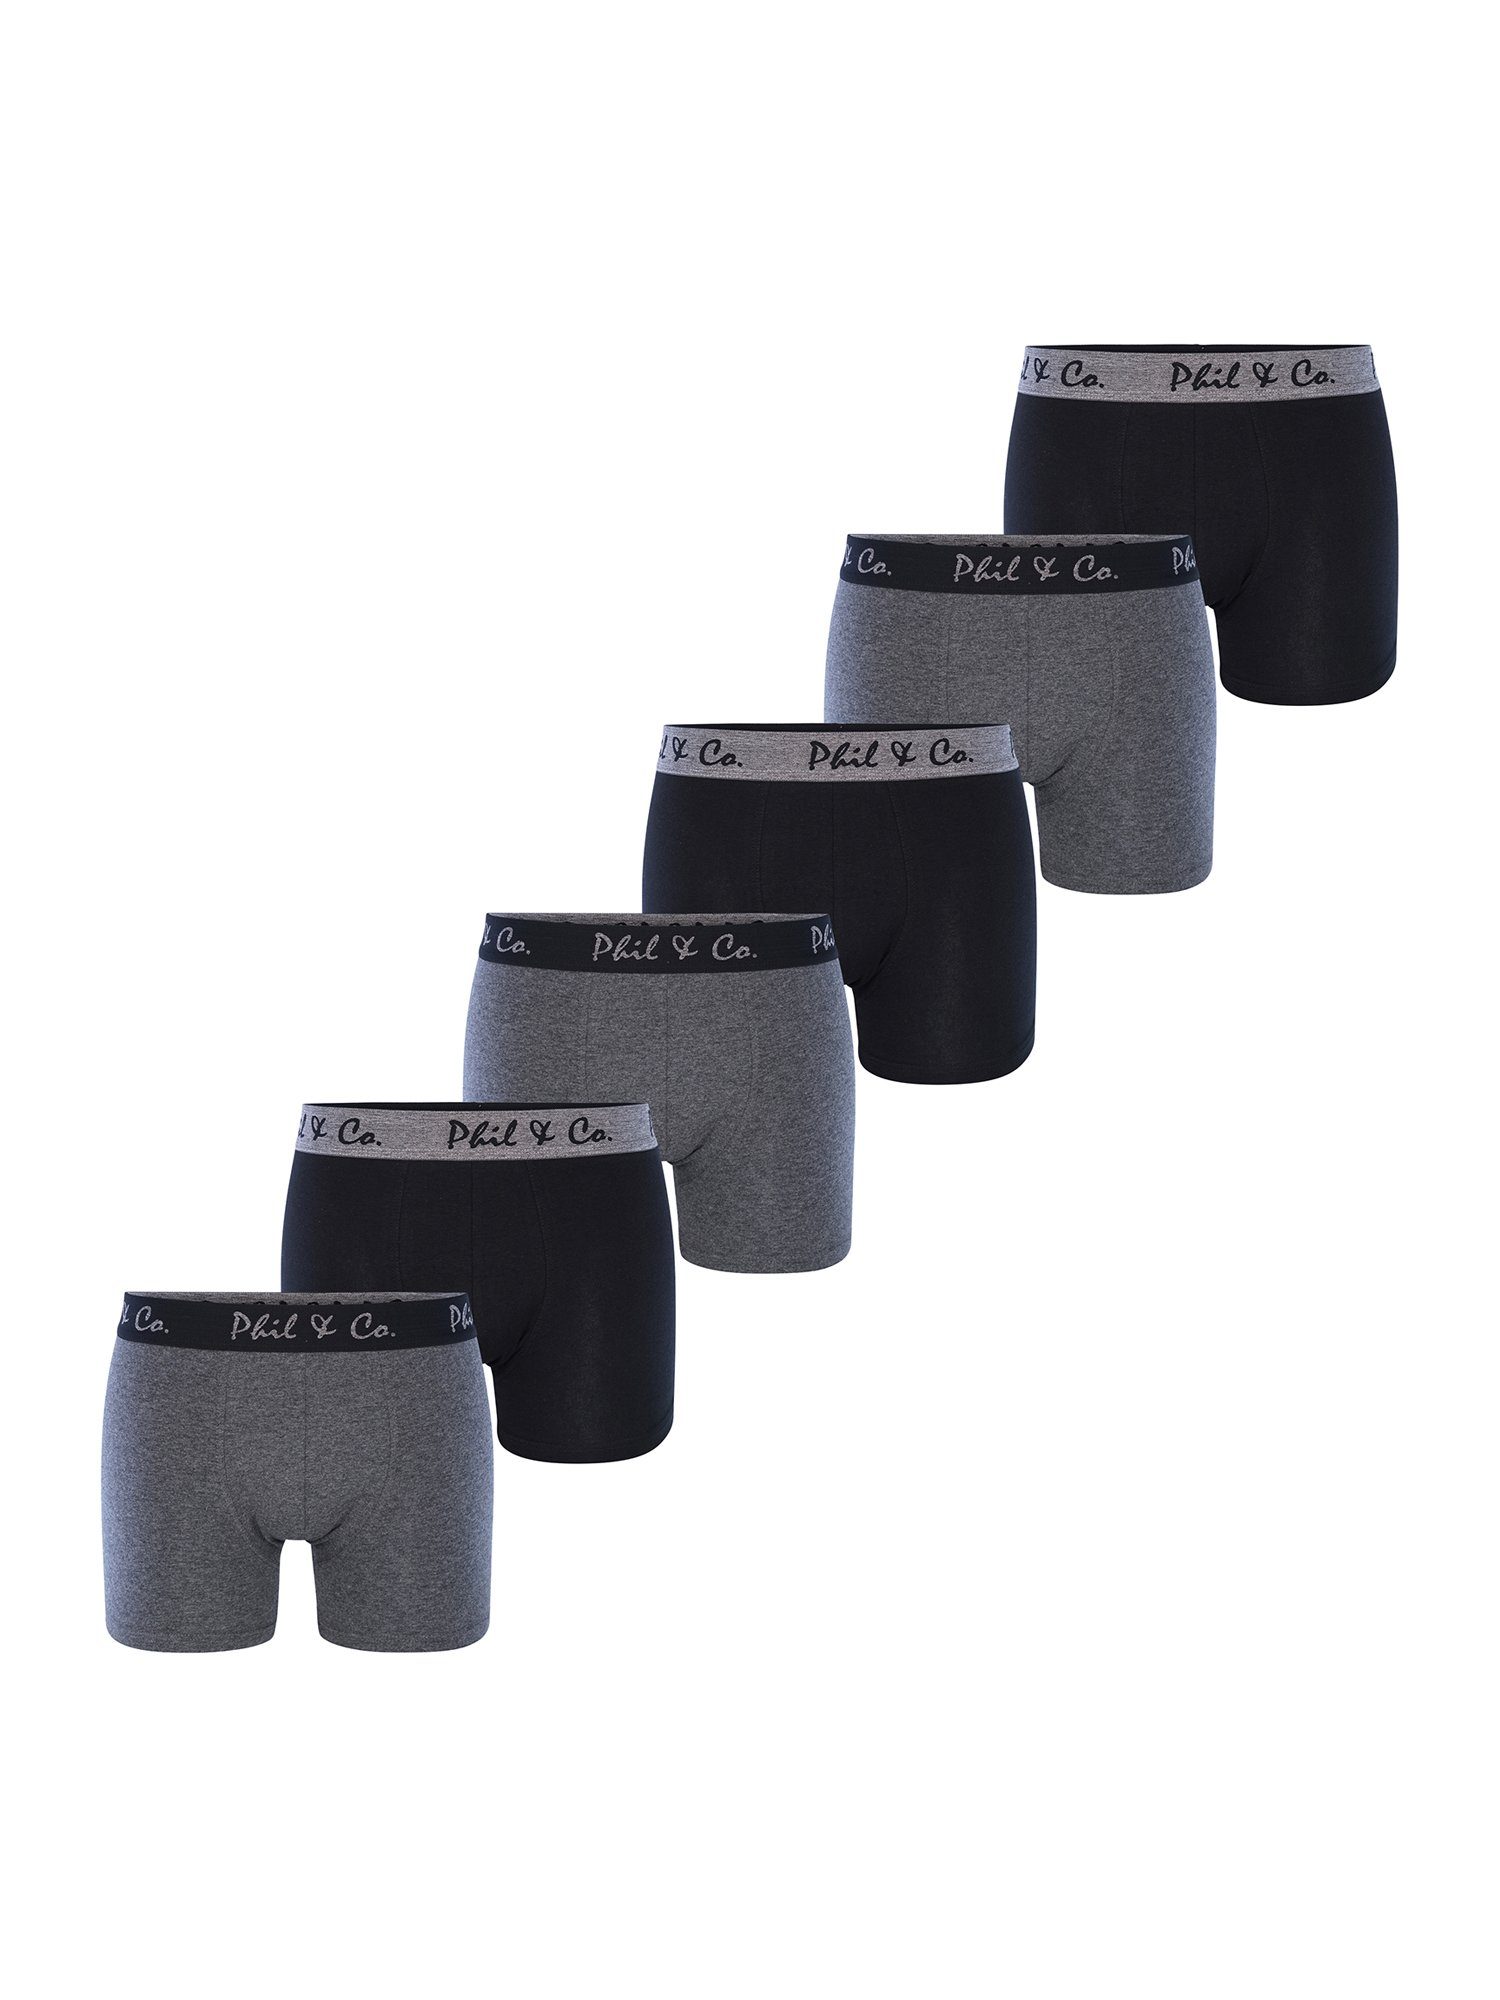 Phil & Co. Retro Pants Jersey (6-St) schwarz-anthrazit